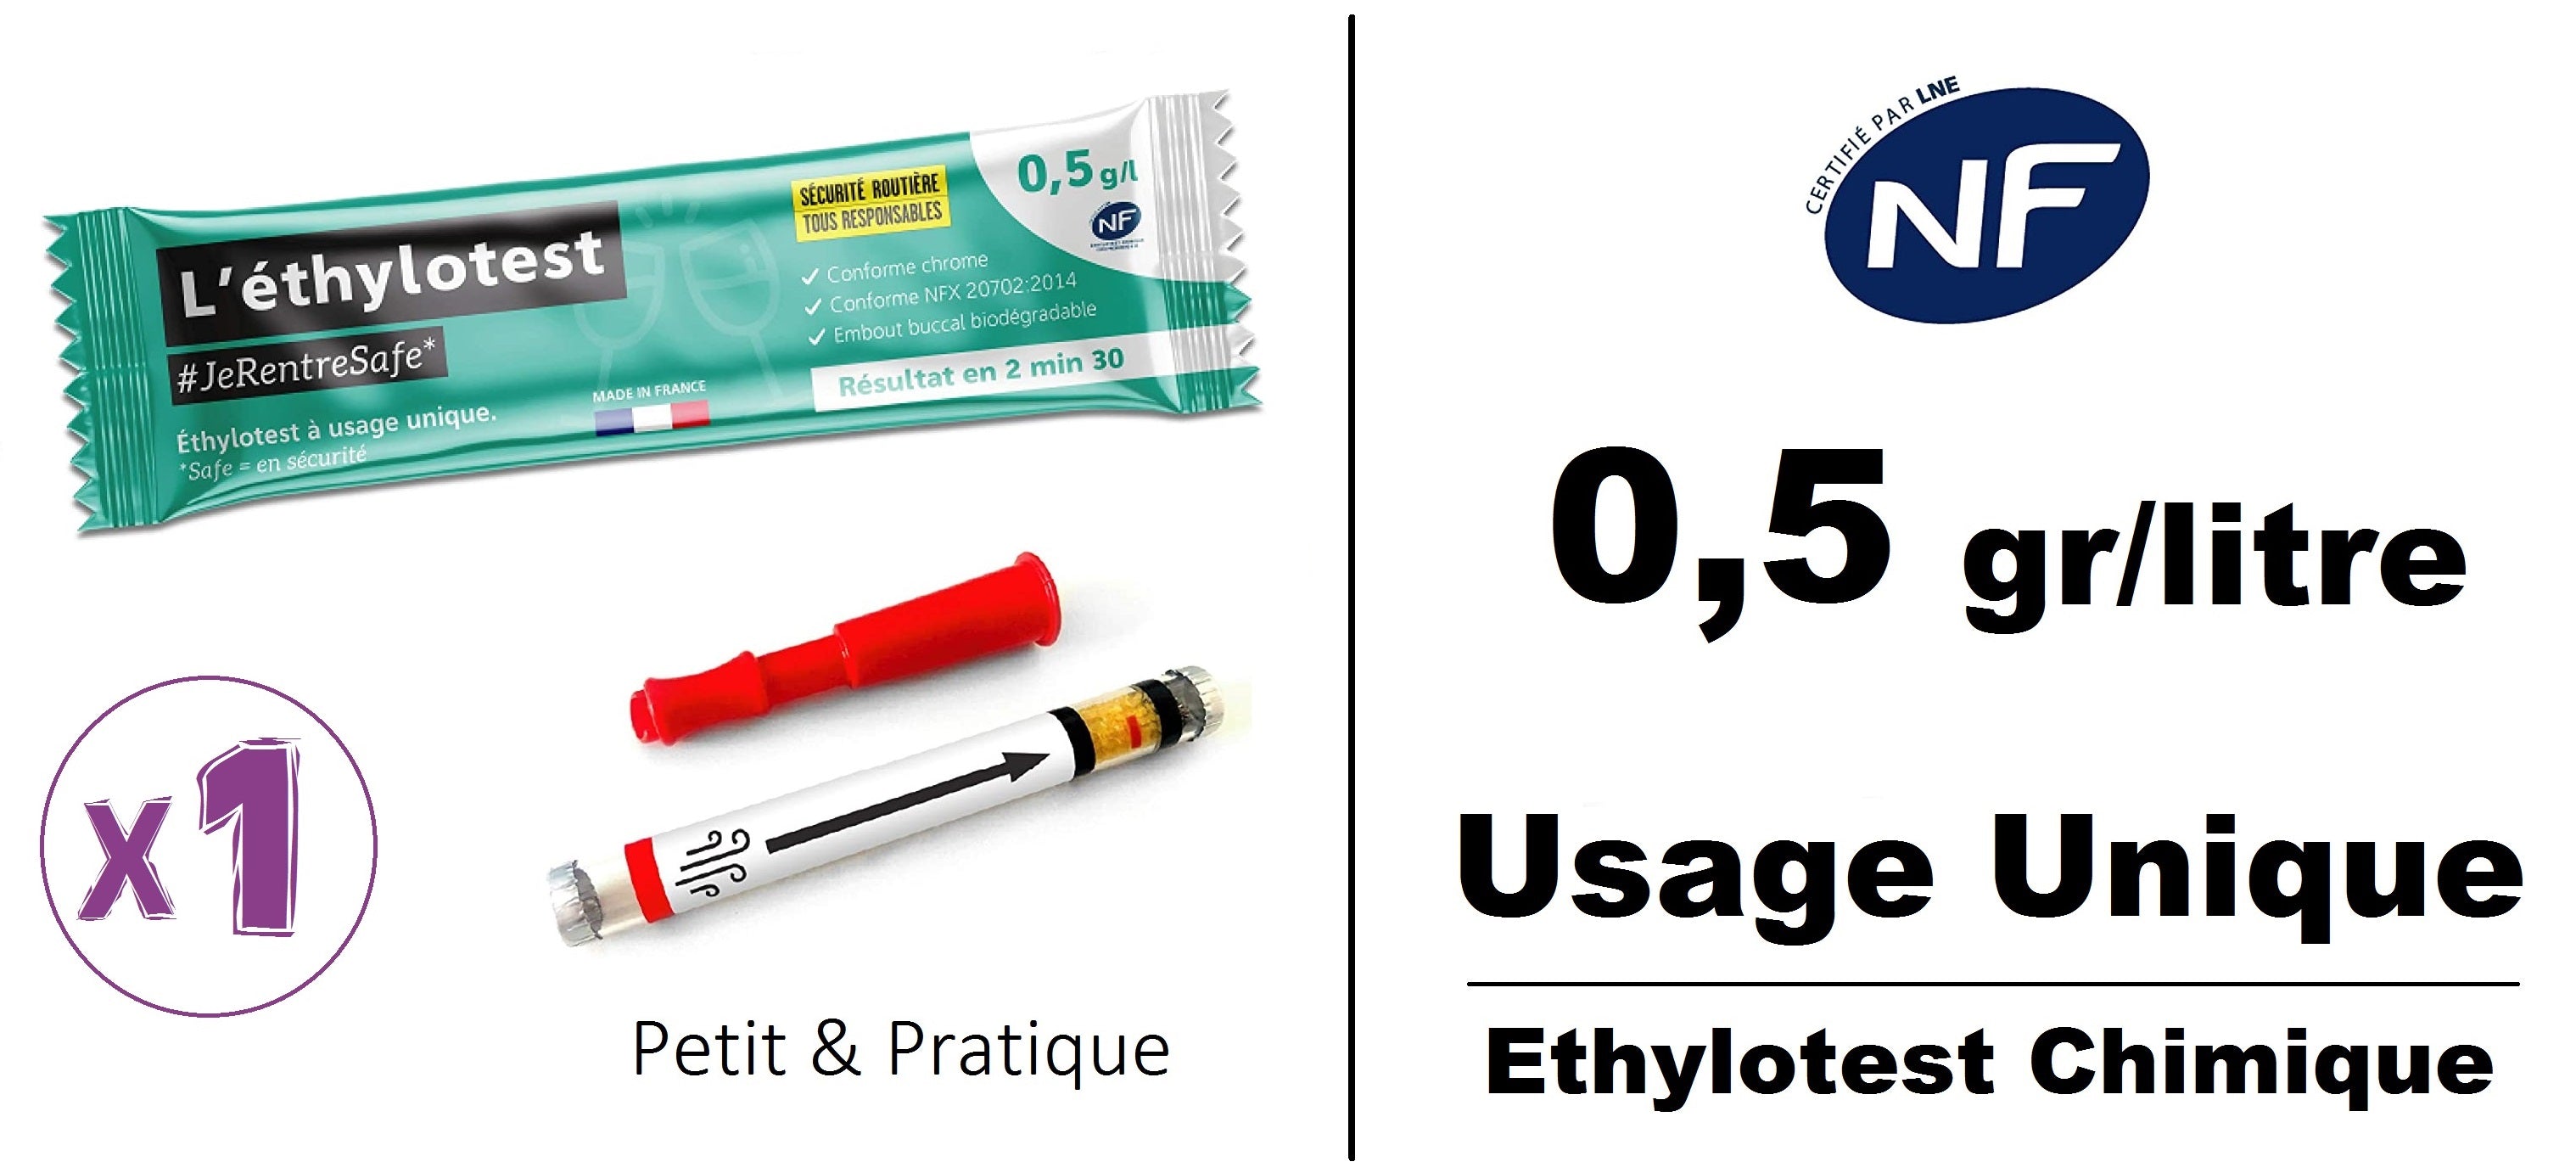 Ethylotest chimique jetable 0,5G